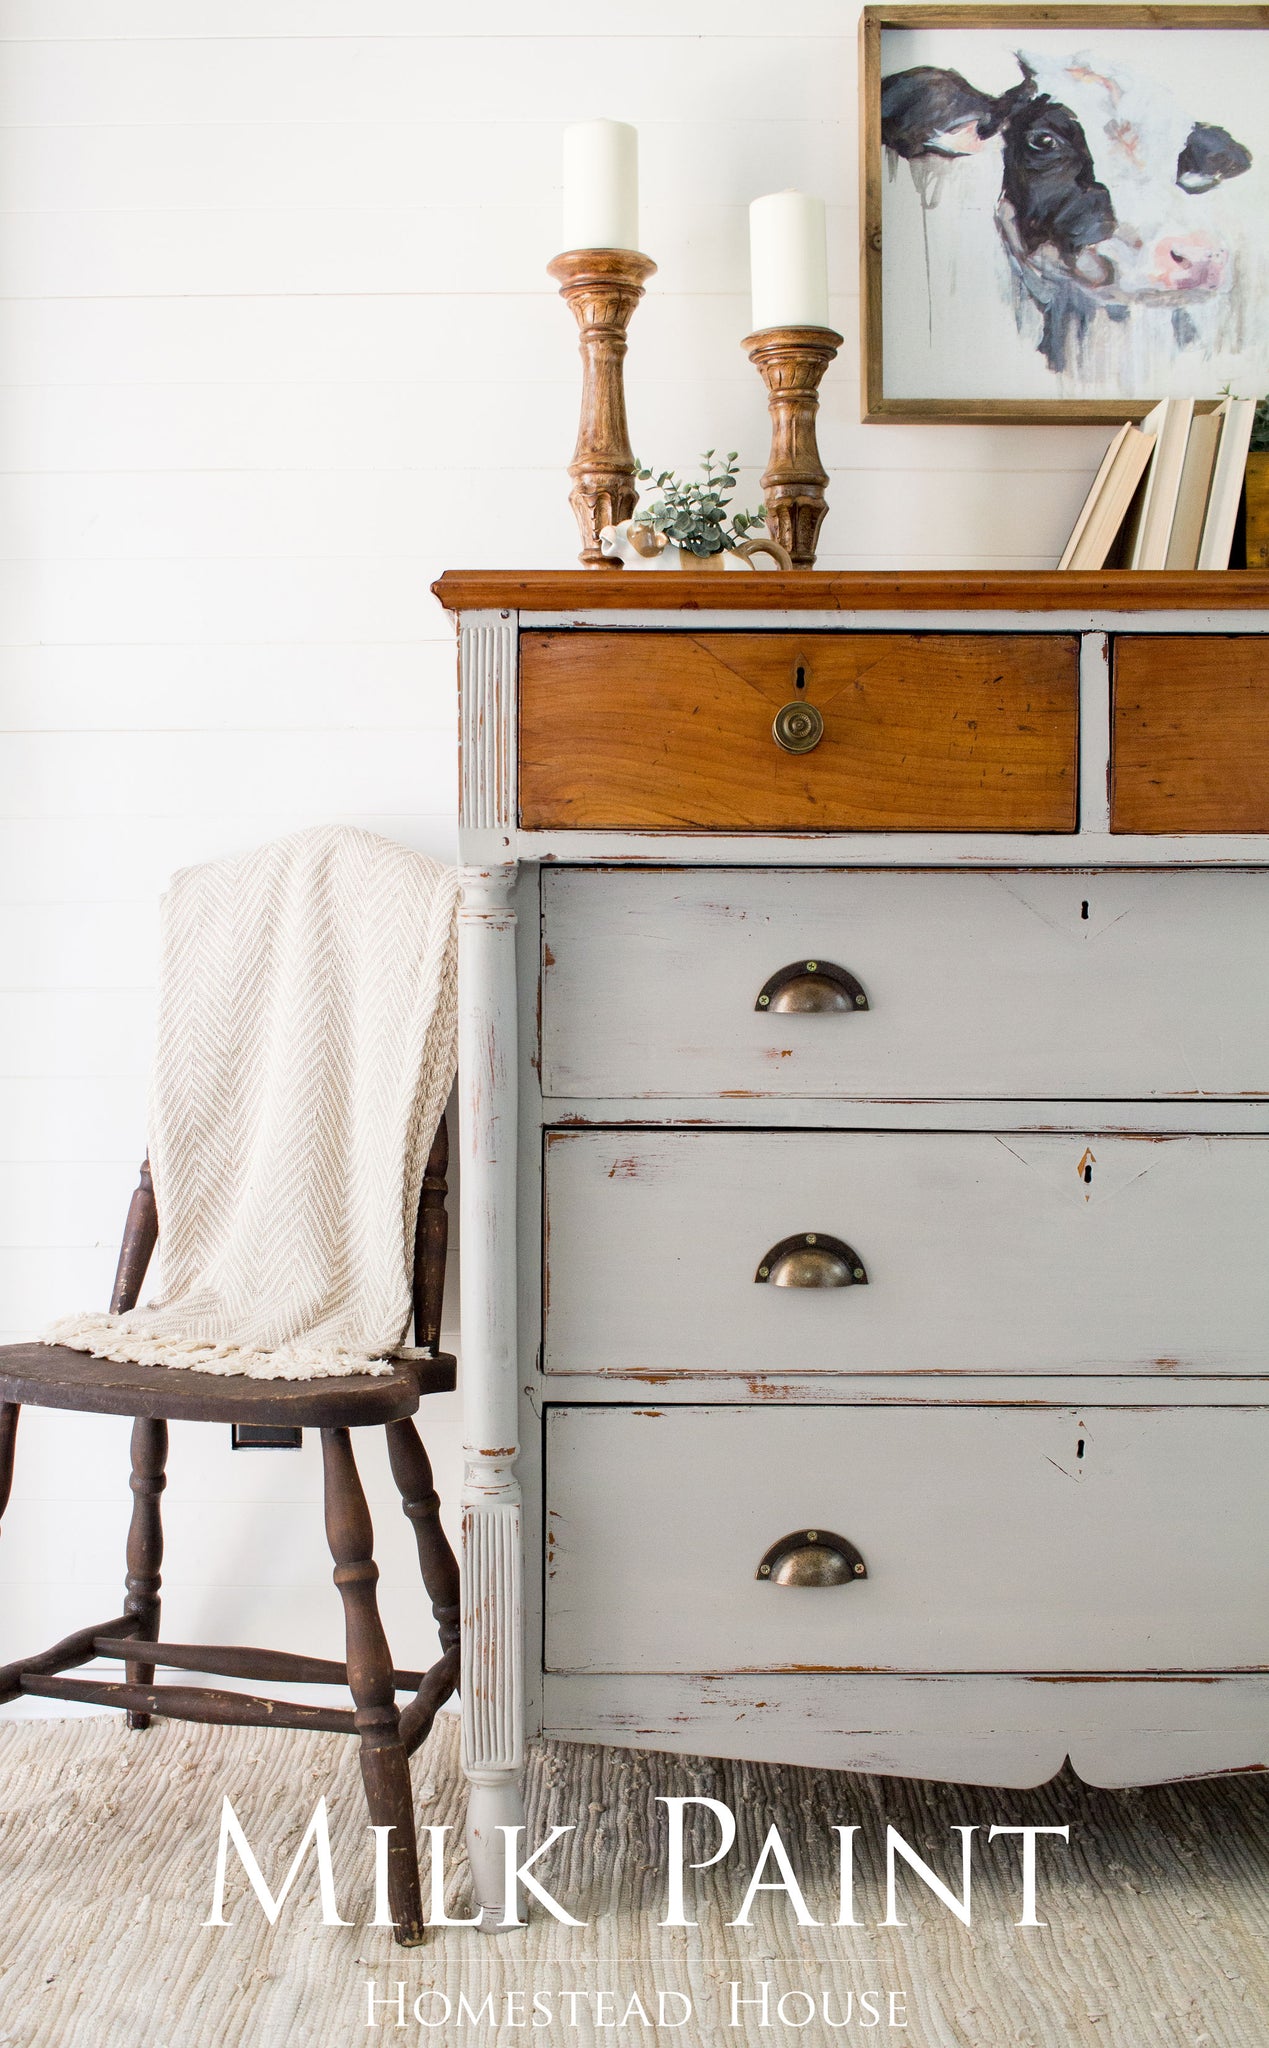 How to Distress an Antique Dresser using Milk Paint – Milk Paint by  Homestead House